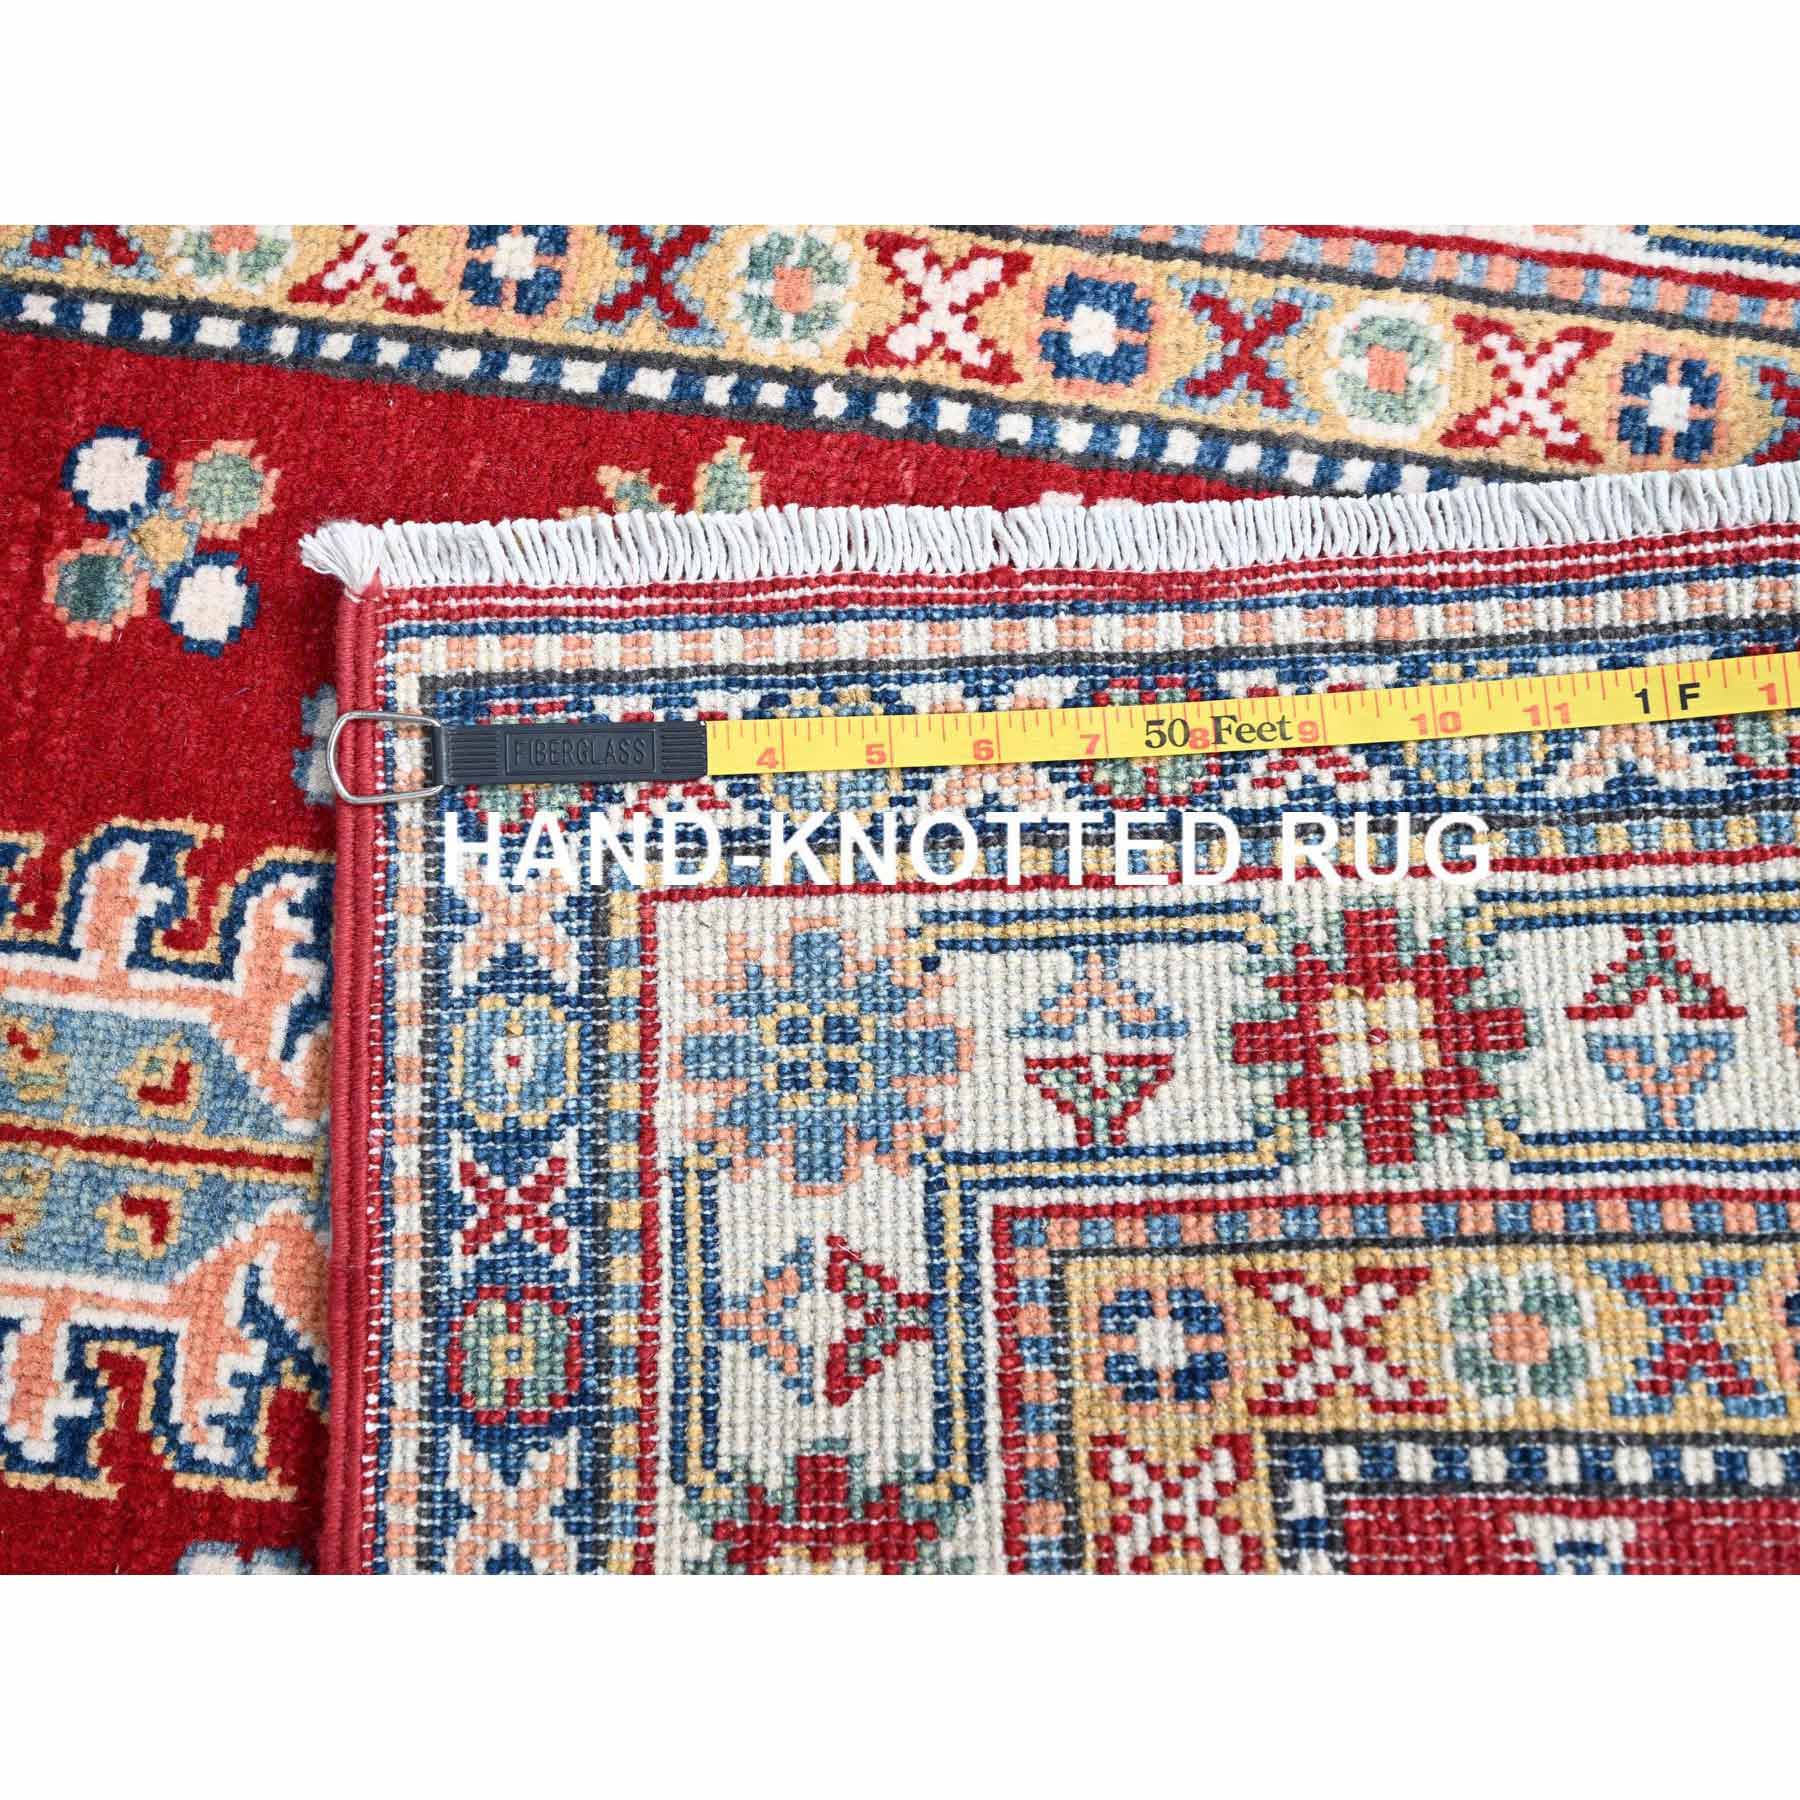 Kazak-Hand-Knotted-Rug-434260